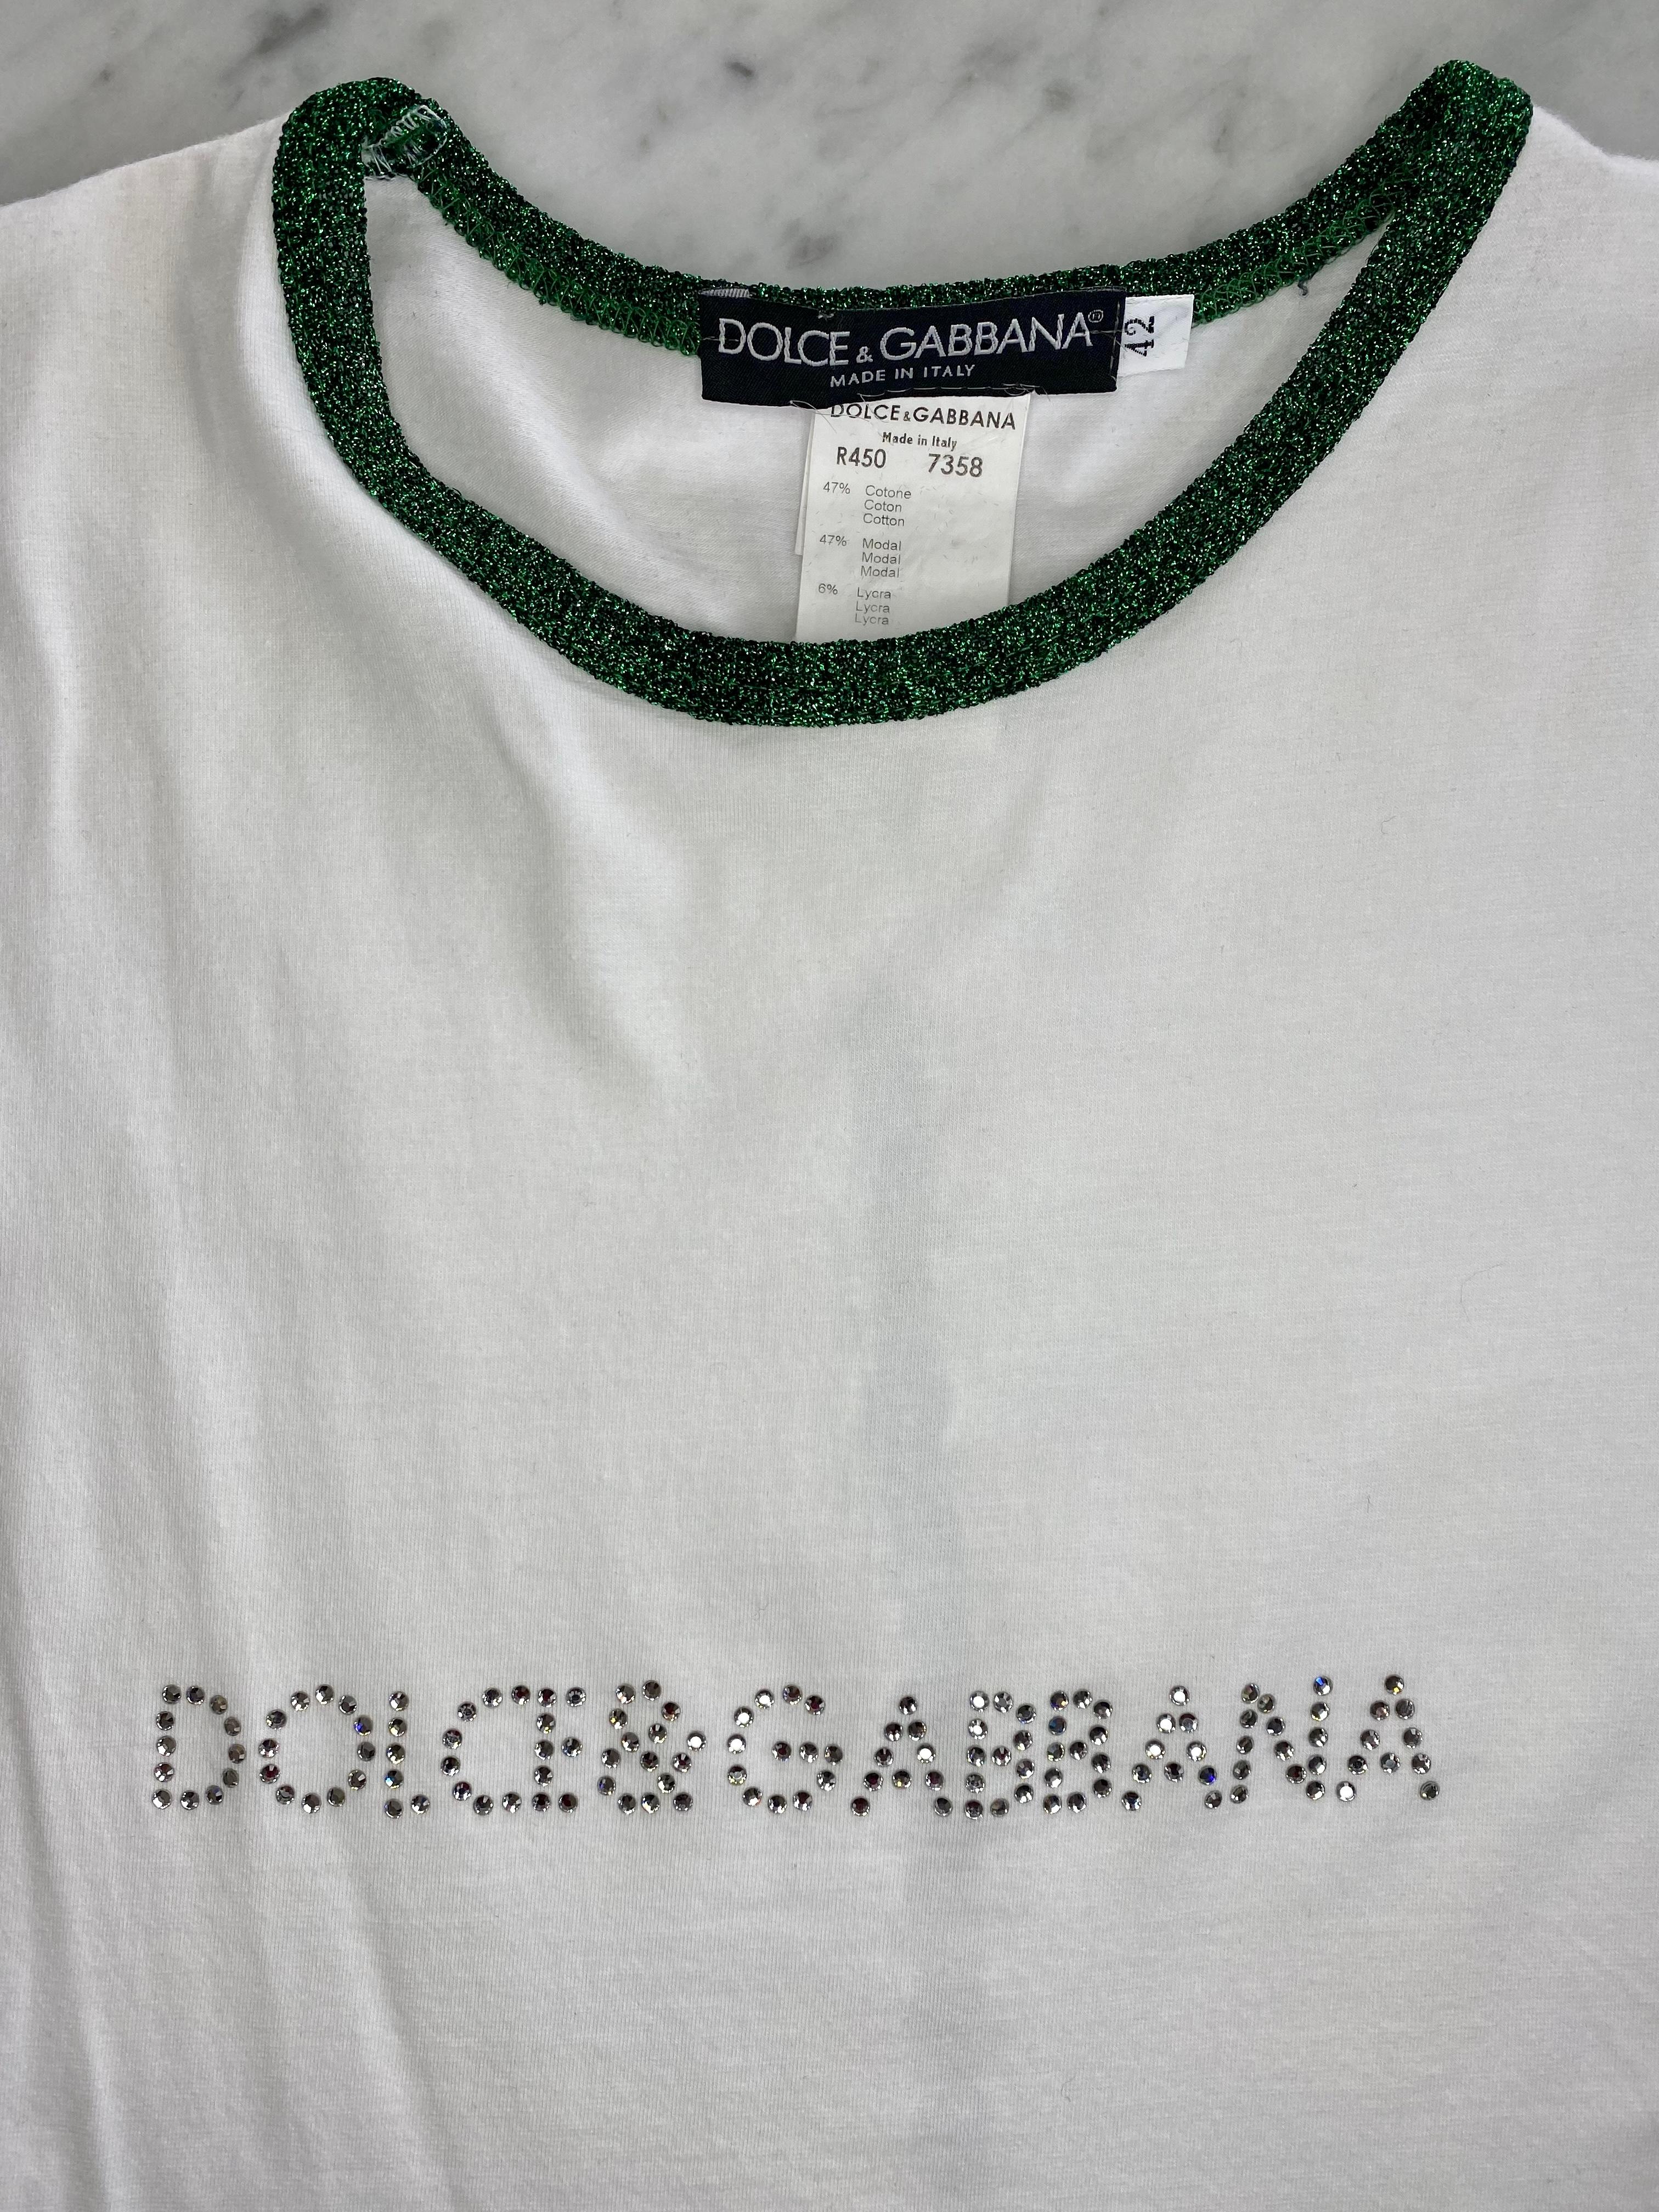 Gray S/S 2001 Dolce & Gabbana Safety Pin Rhinestone Logo Tank Top Metallic Green Trim